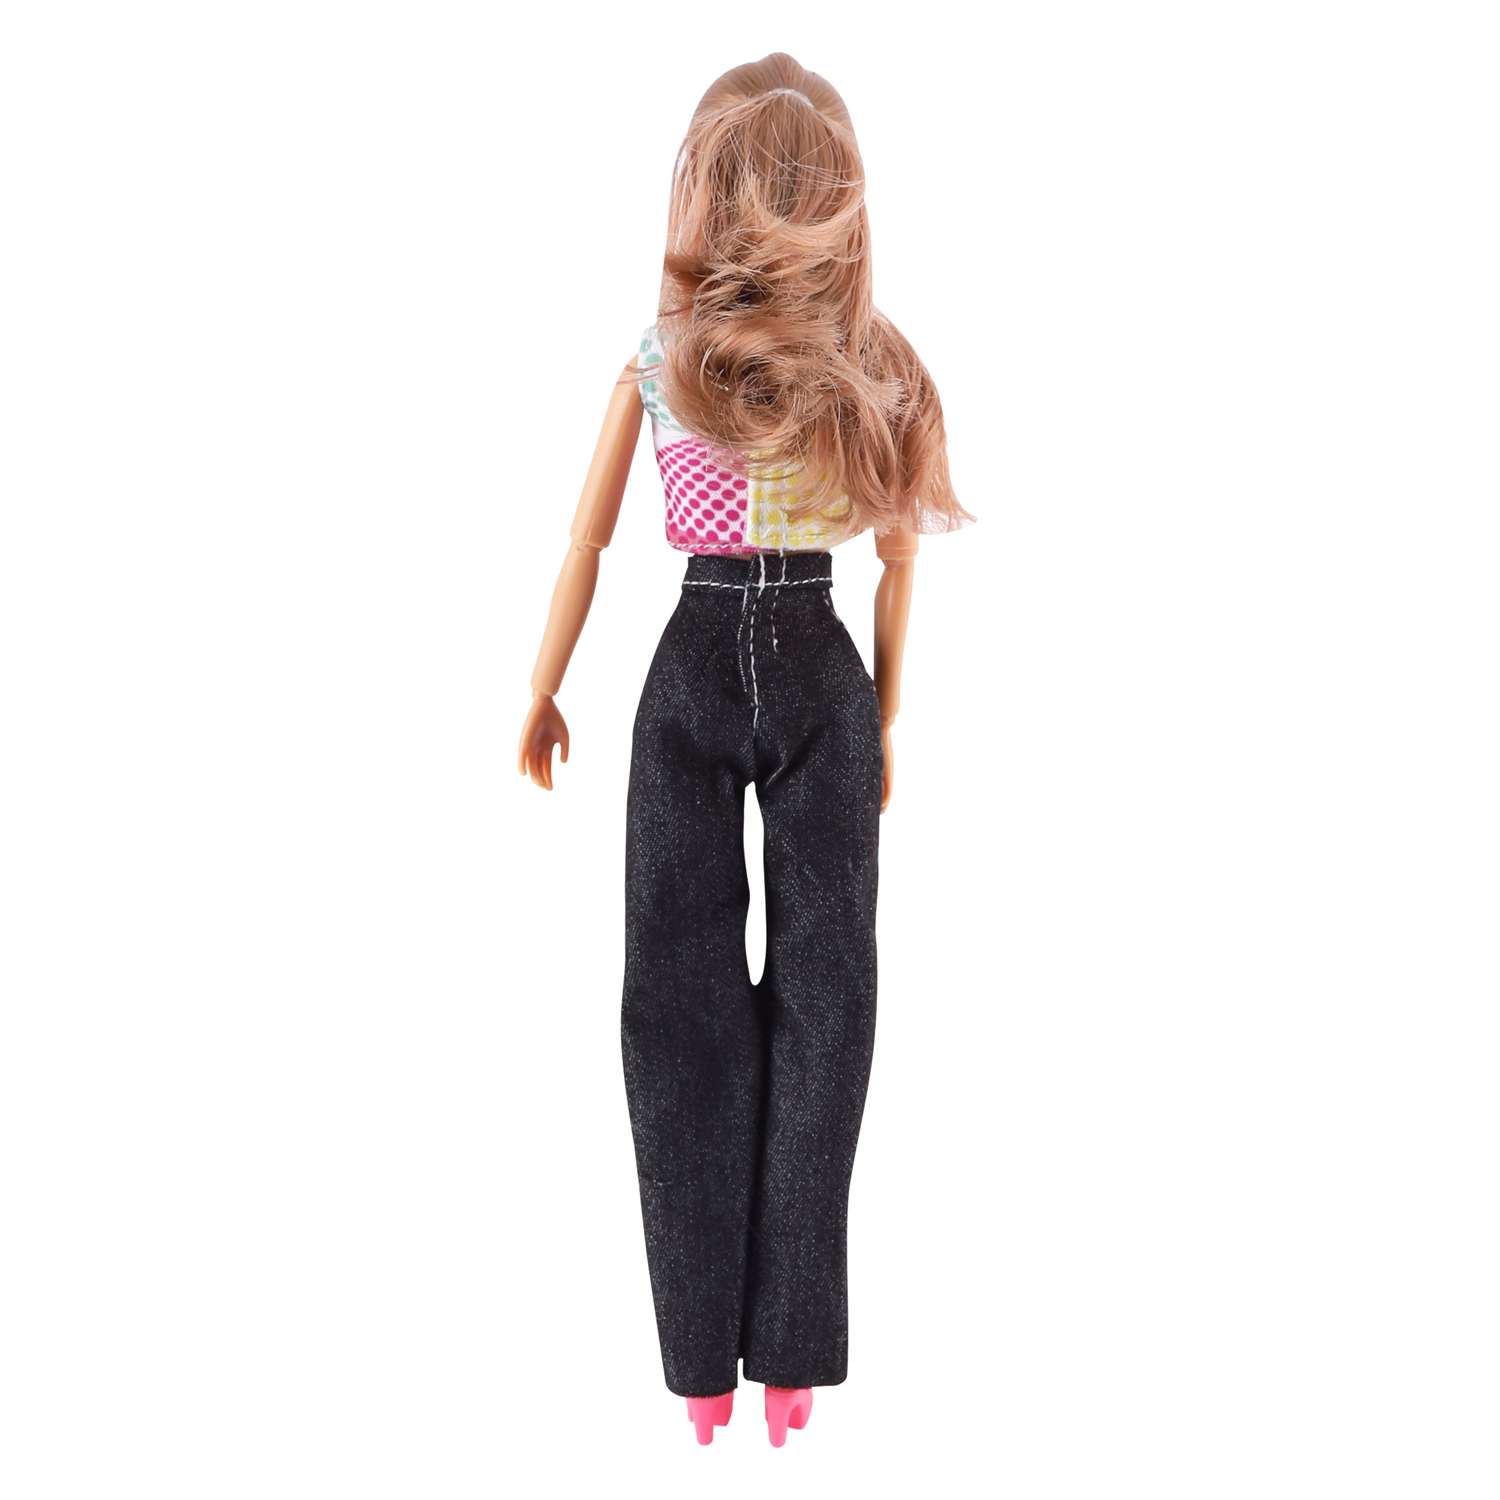 Кукла Demi Star в стильных джинсах 616060B 616060B - фото 4